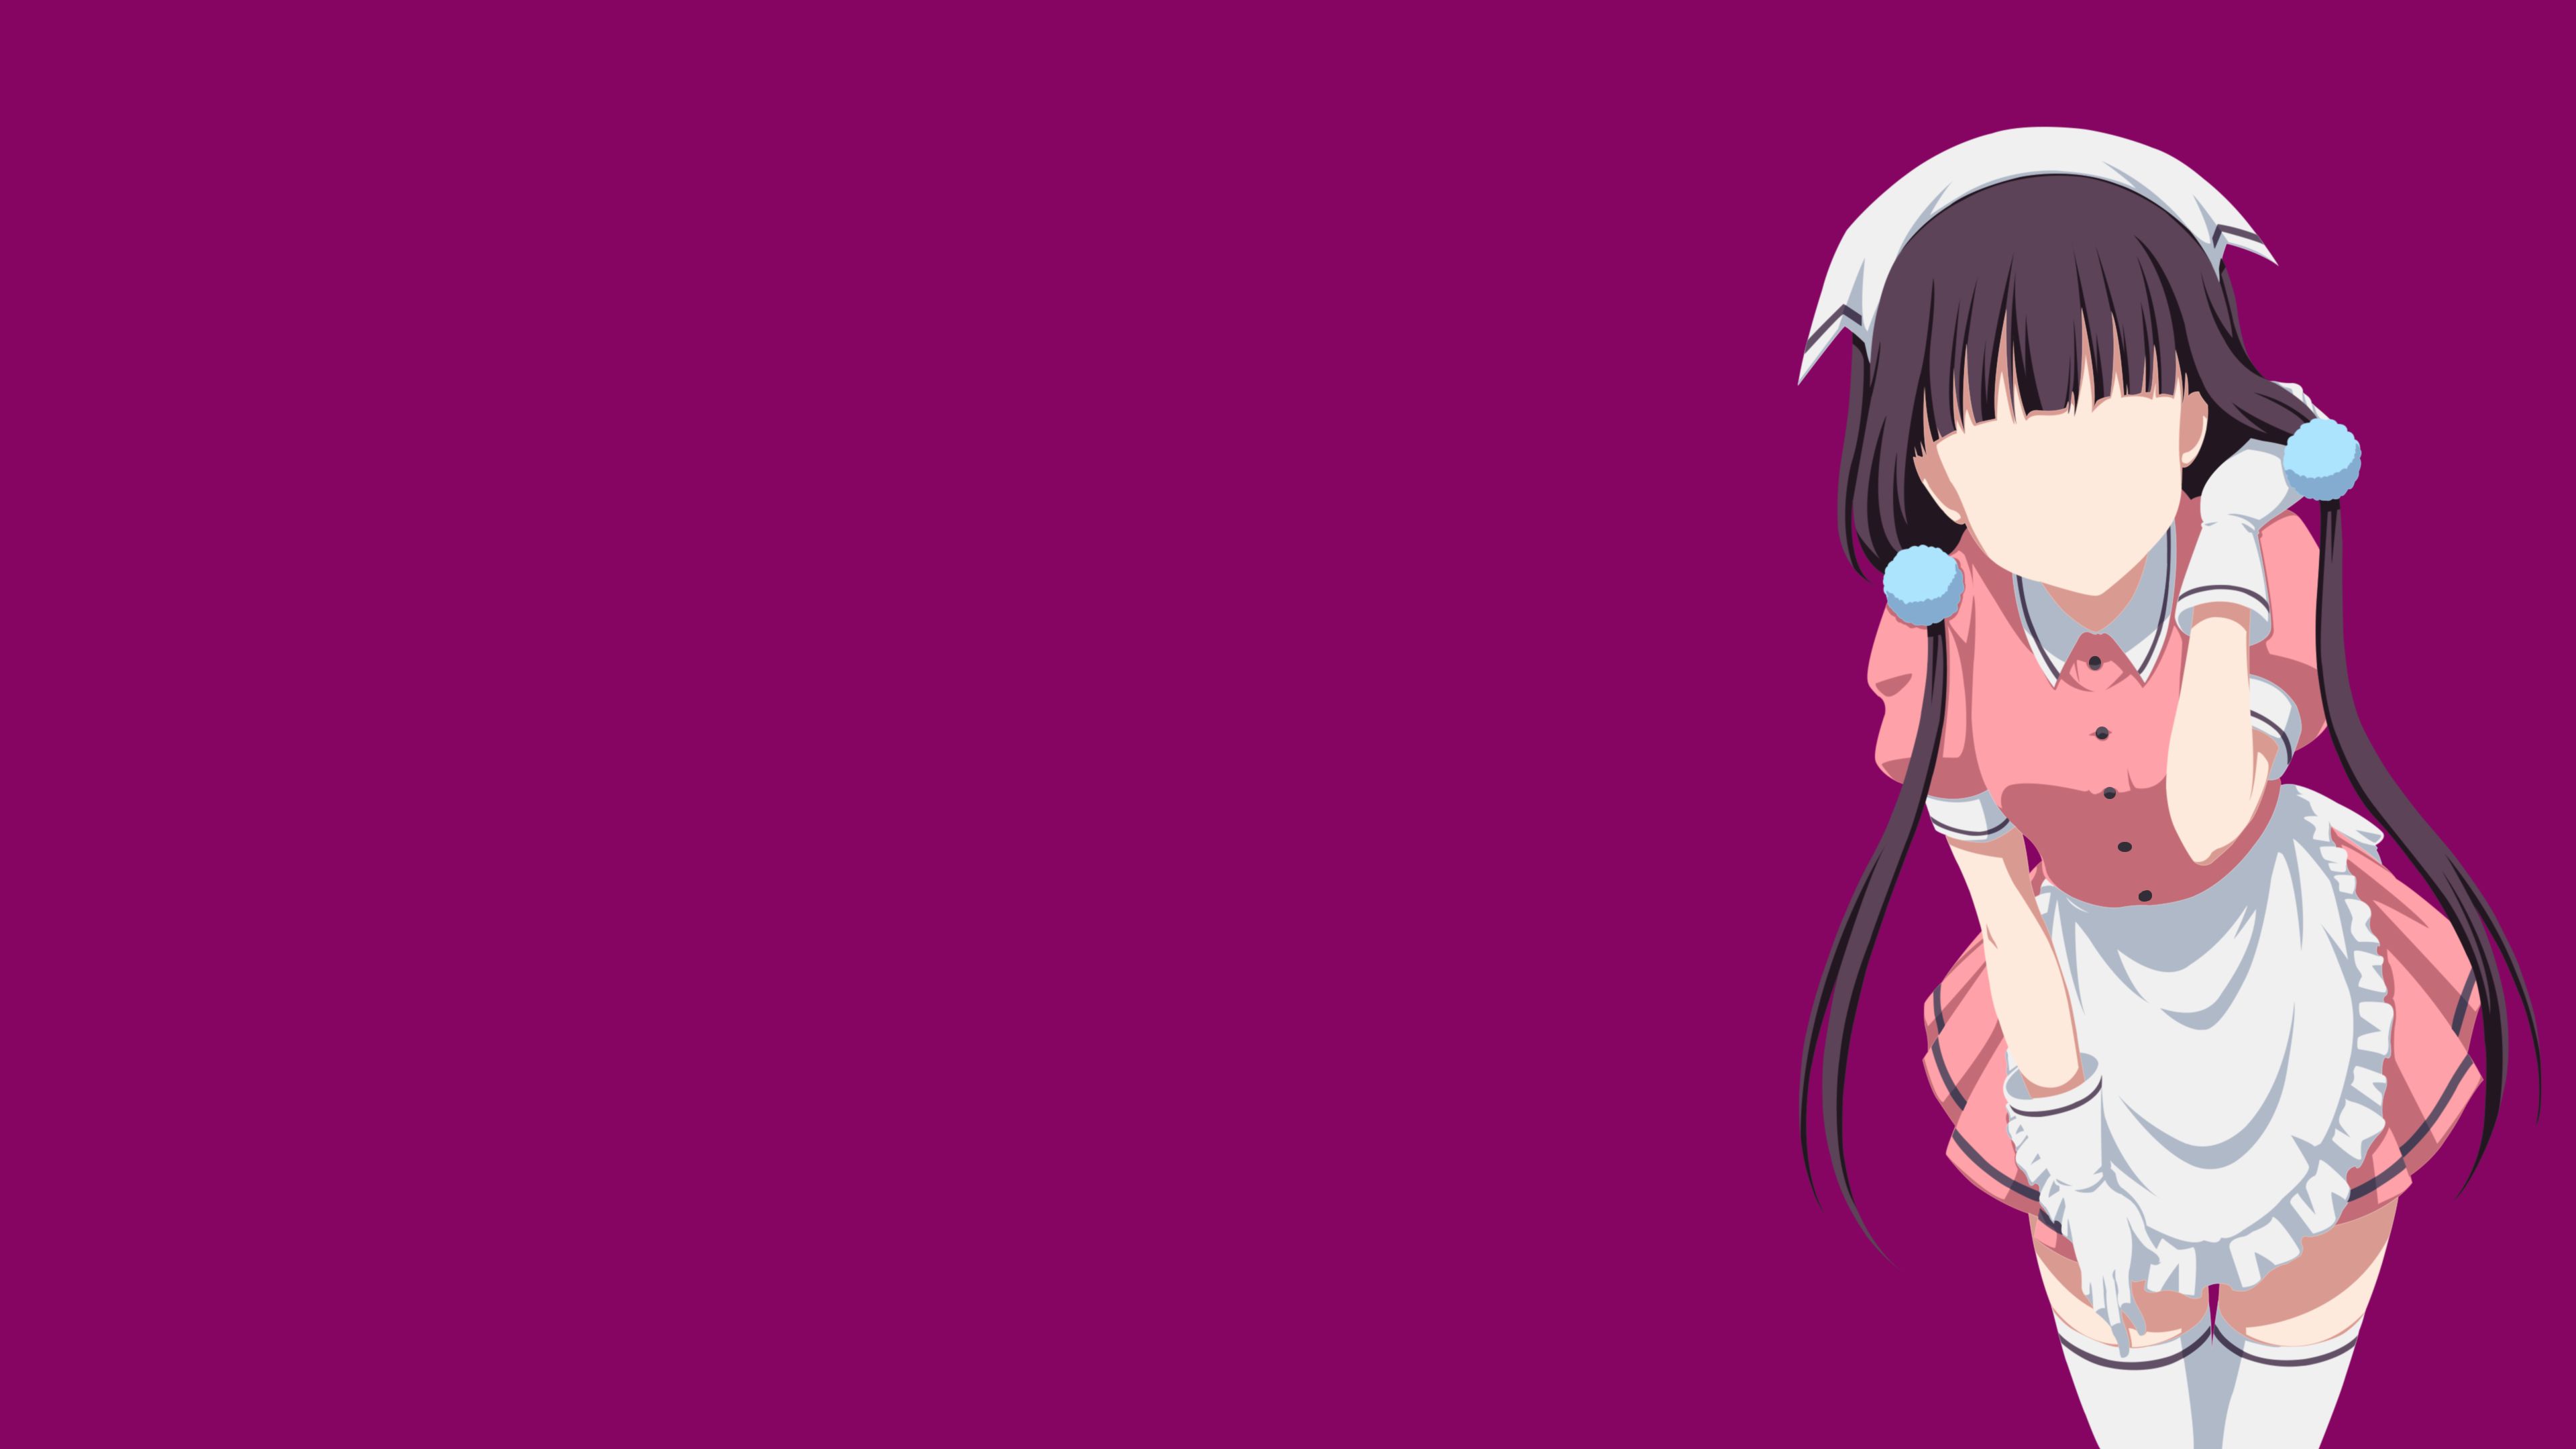 885425 descargar imagen animado, blend s, maika sakuranomiya: fondos de pantalla y protectores de pantalla gratis